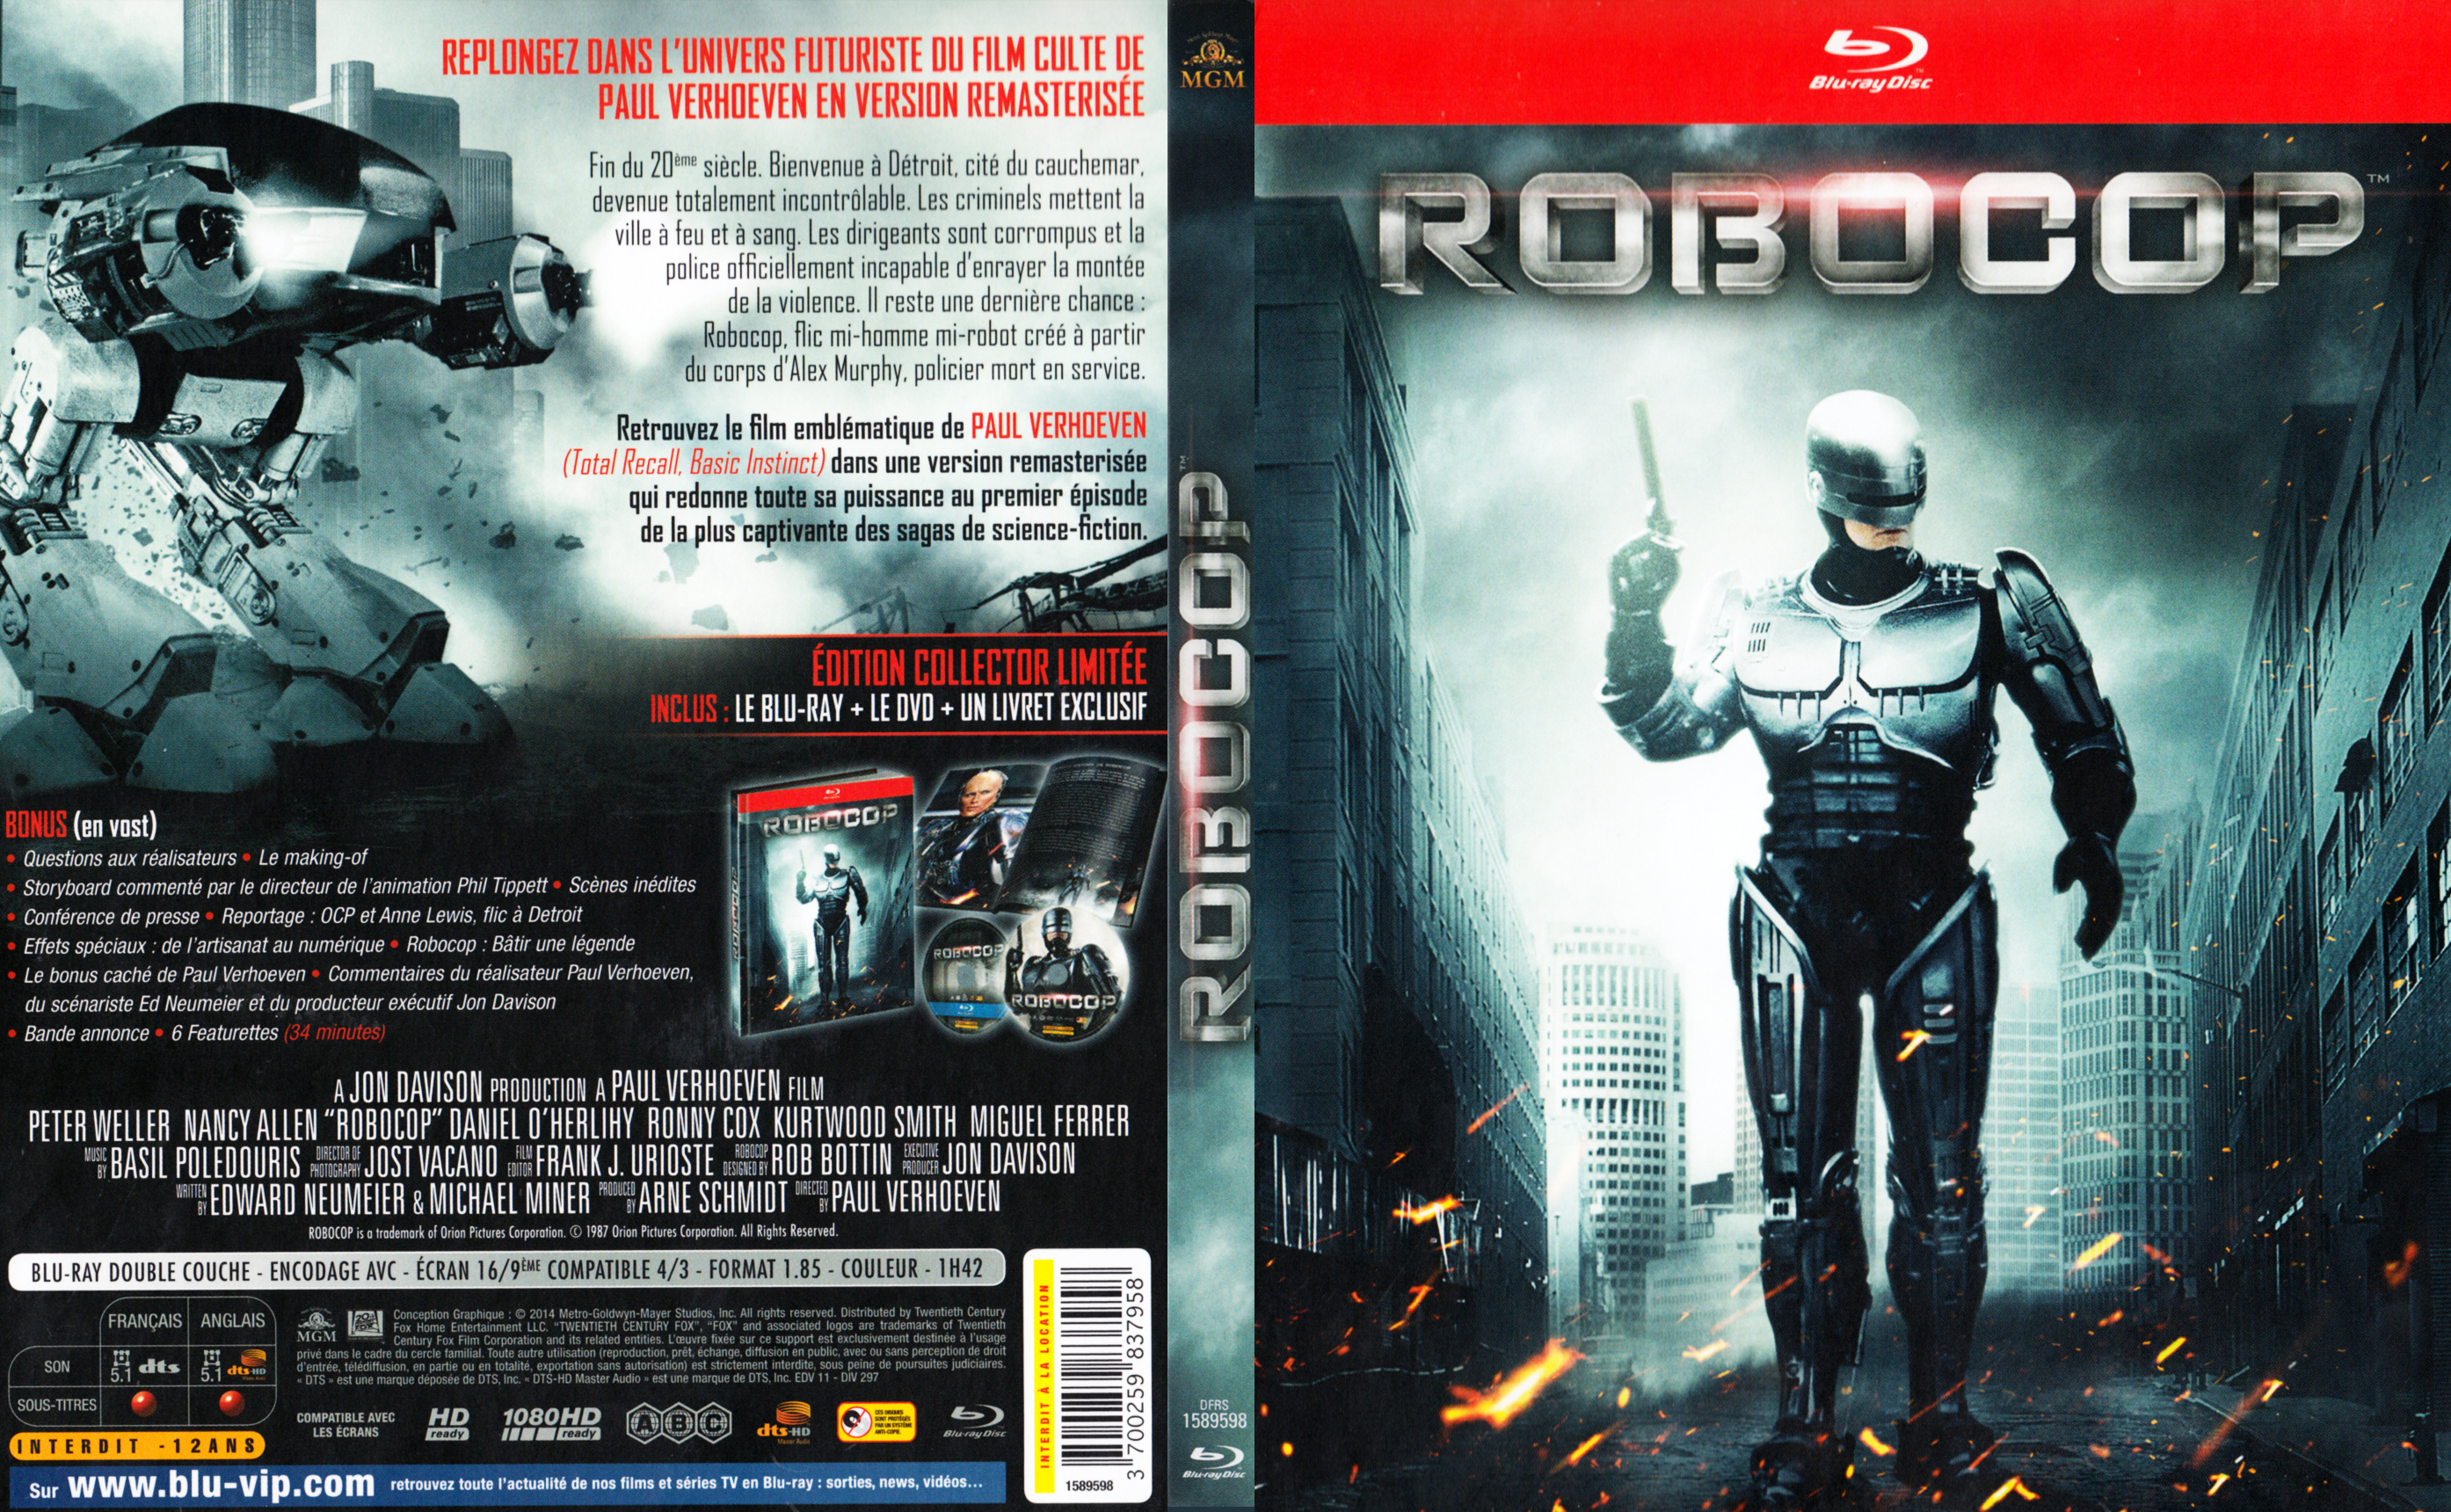 Jaquette DVD Robocop (BLU-RAY) v3